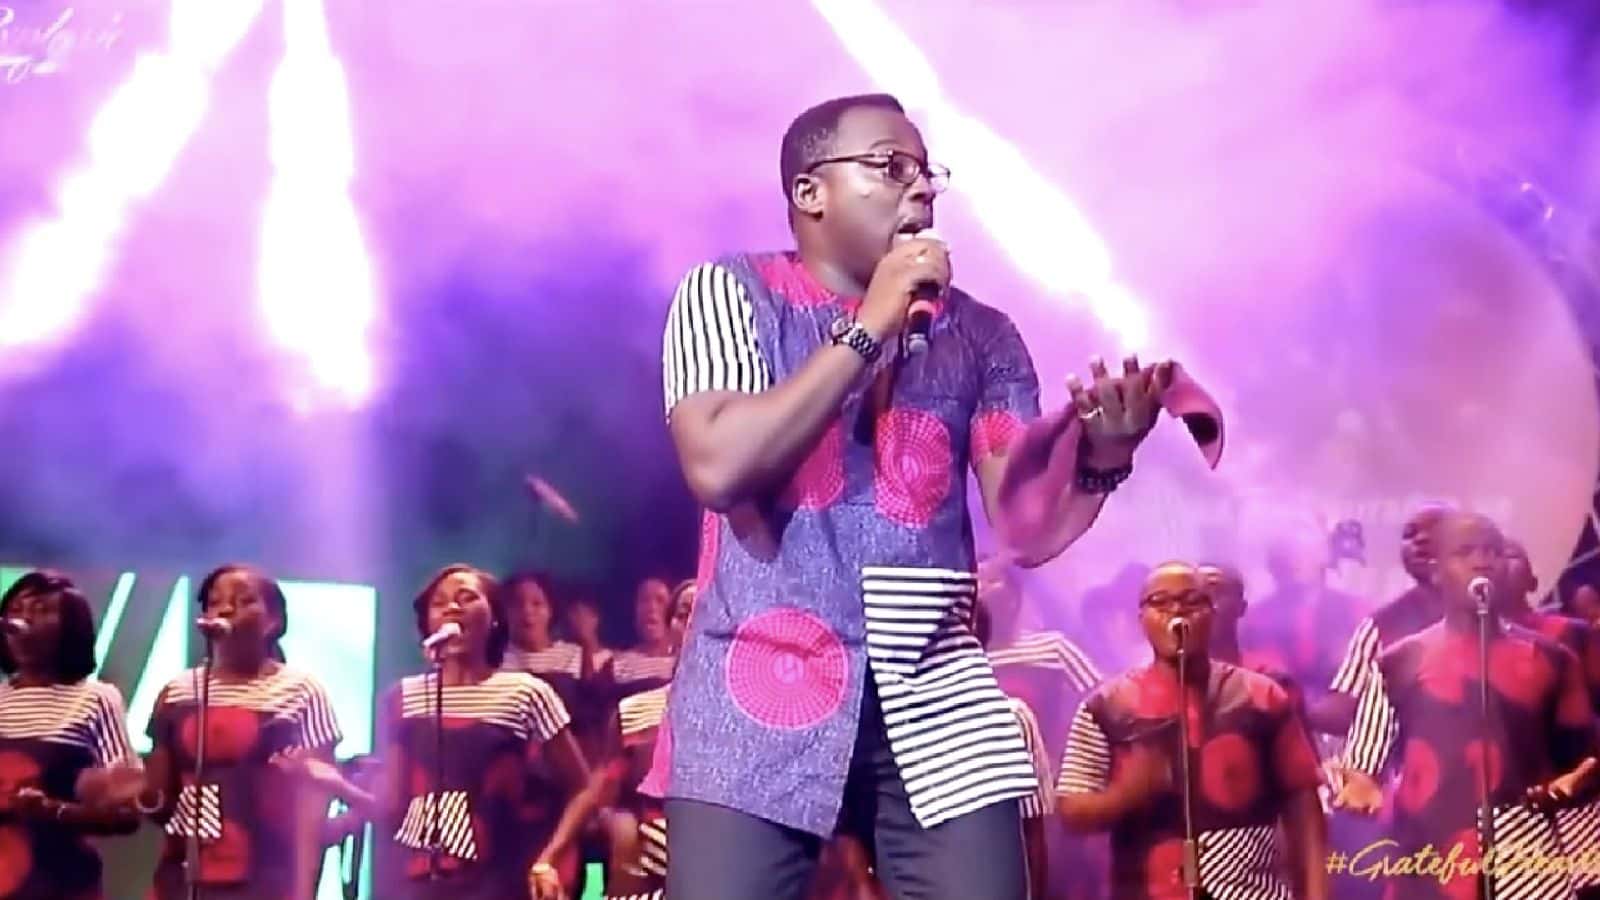 Ghana Praise Medley (Live) - Joyful Way Inc. at Explosion of Joy 2016